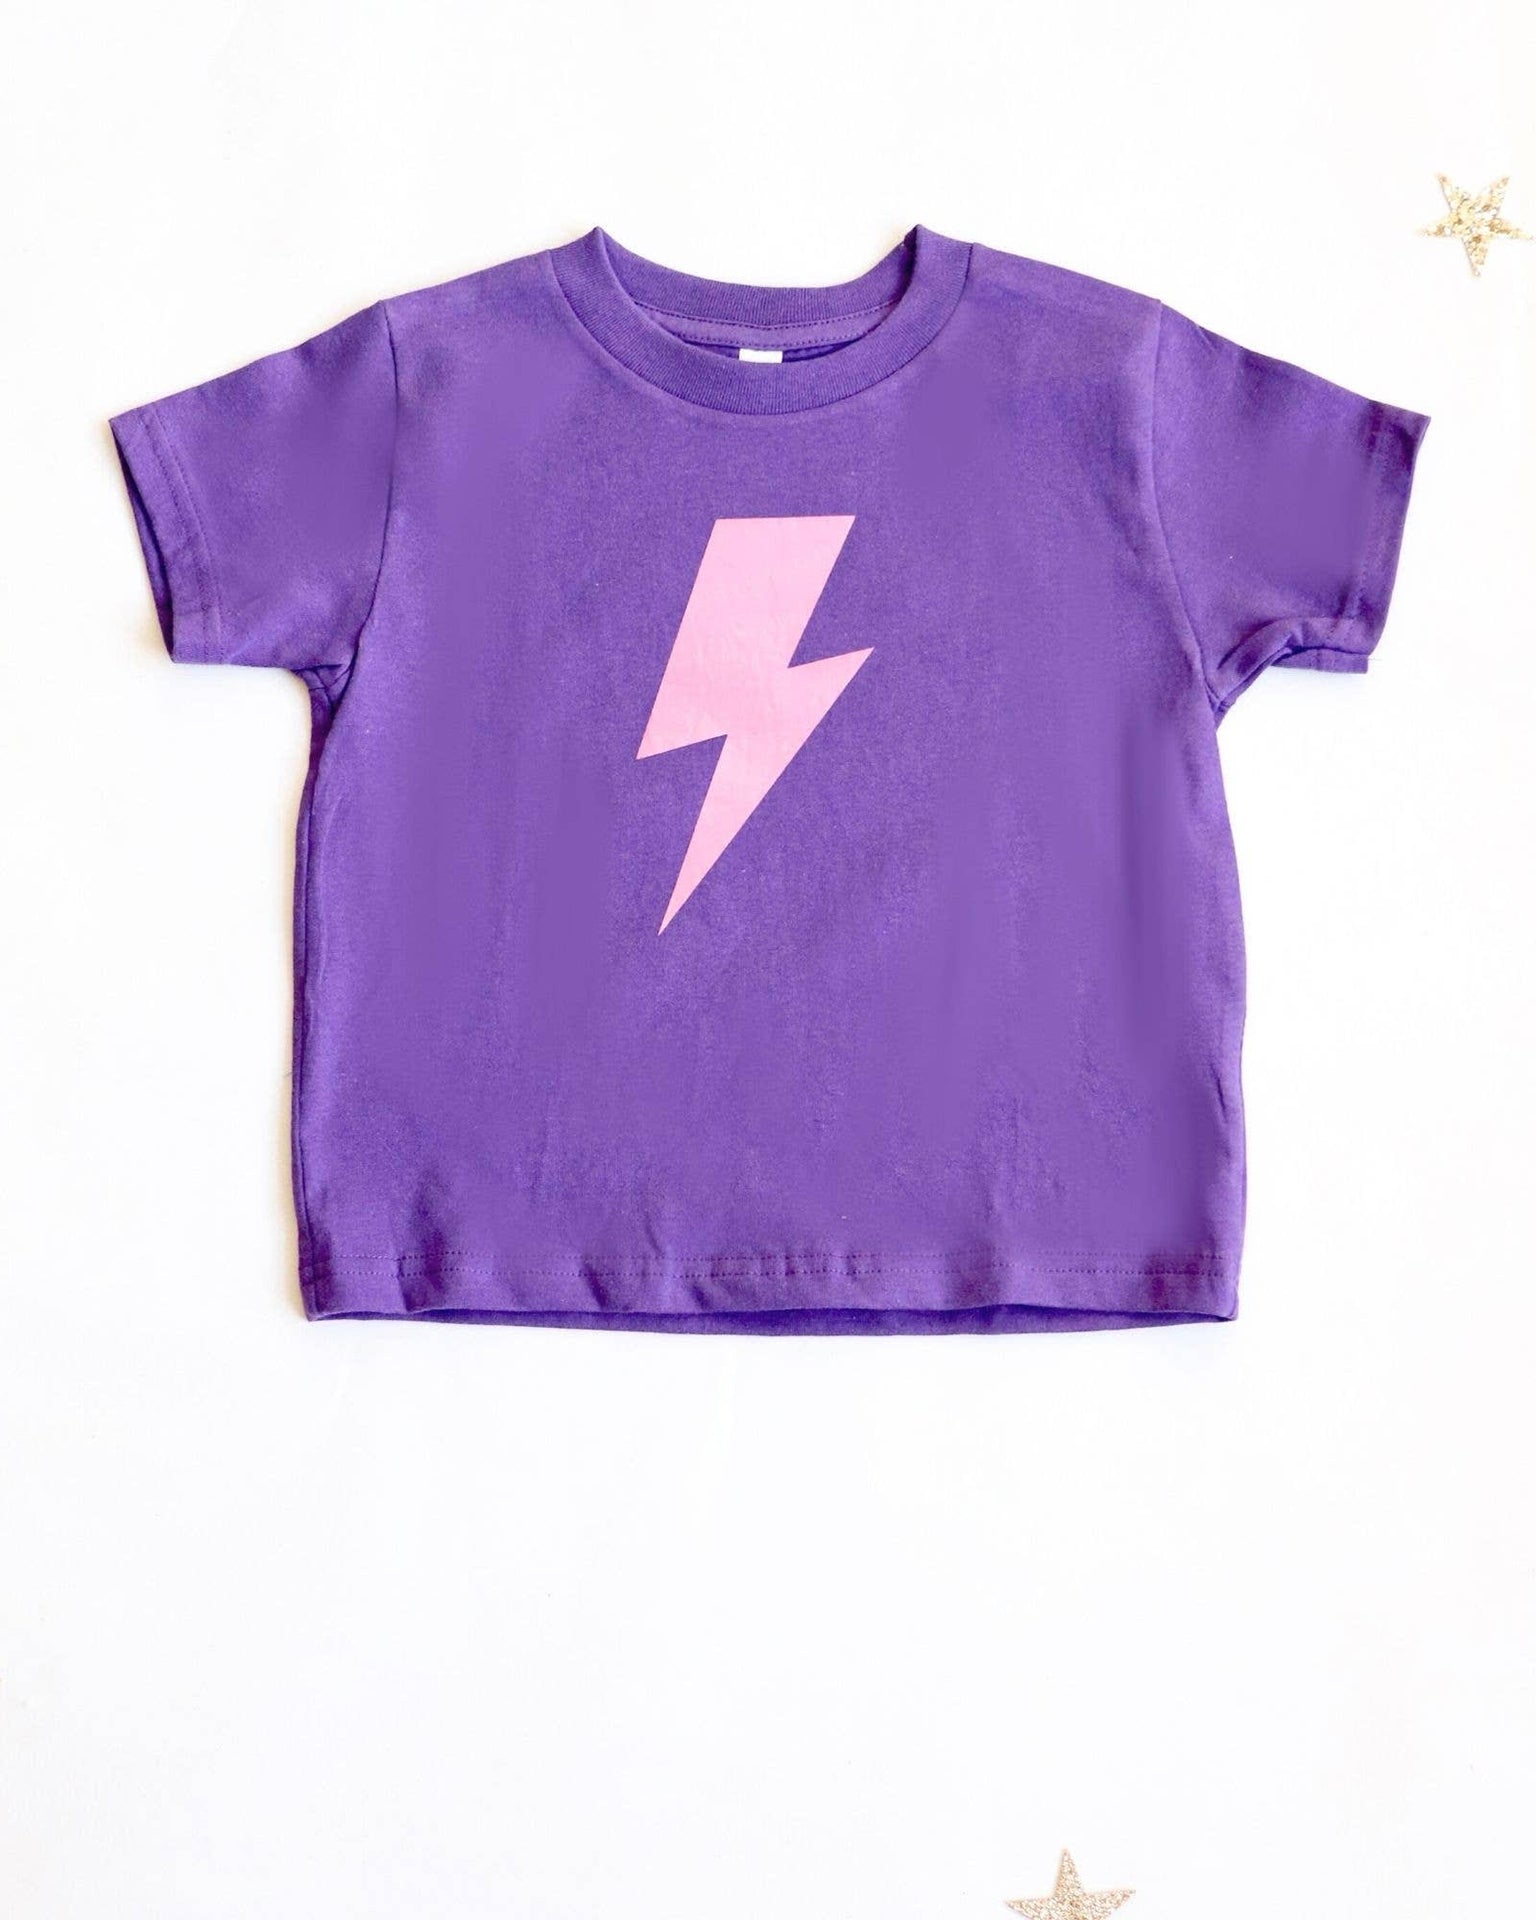 Little bailey + ava accessories lightning bolt tee in purple + gold